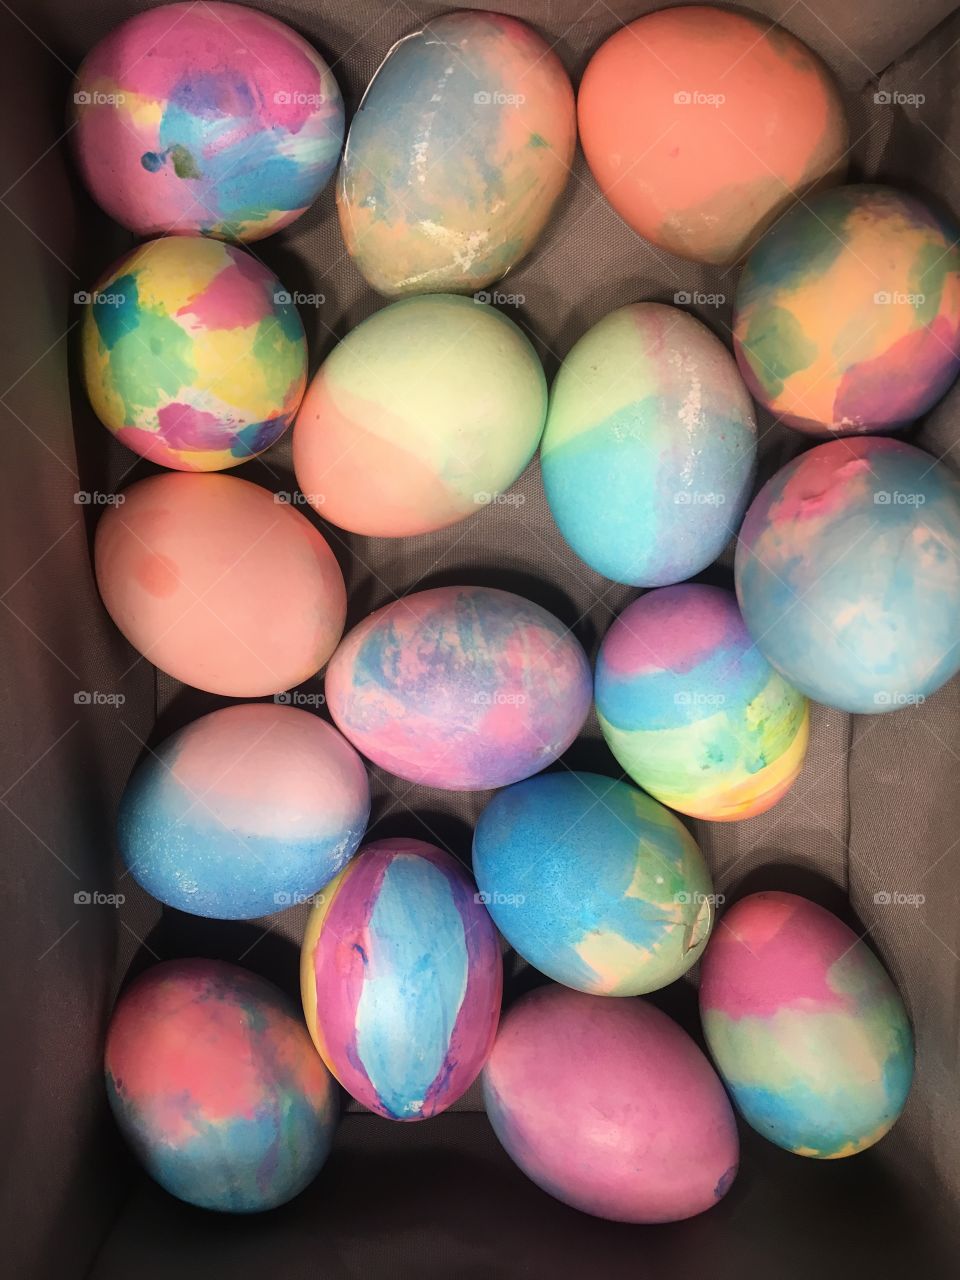 All the coloured eggs 